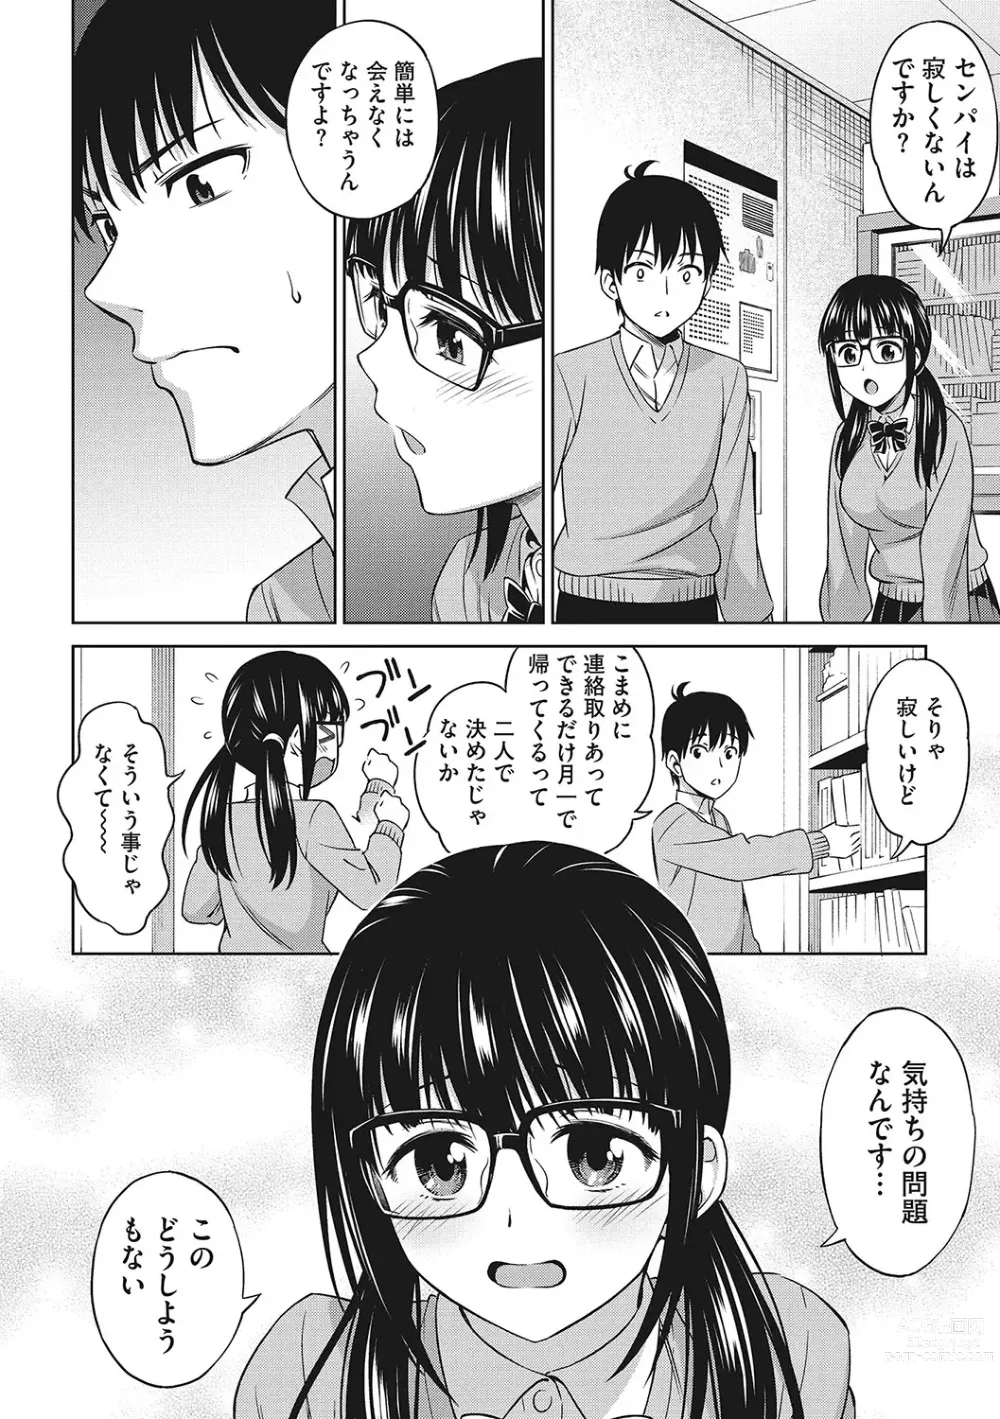 Page 5 of manga Omoide Kudasai